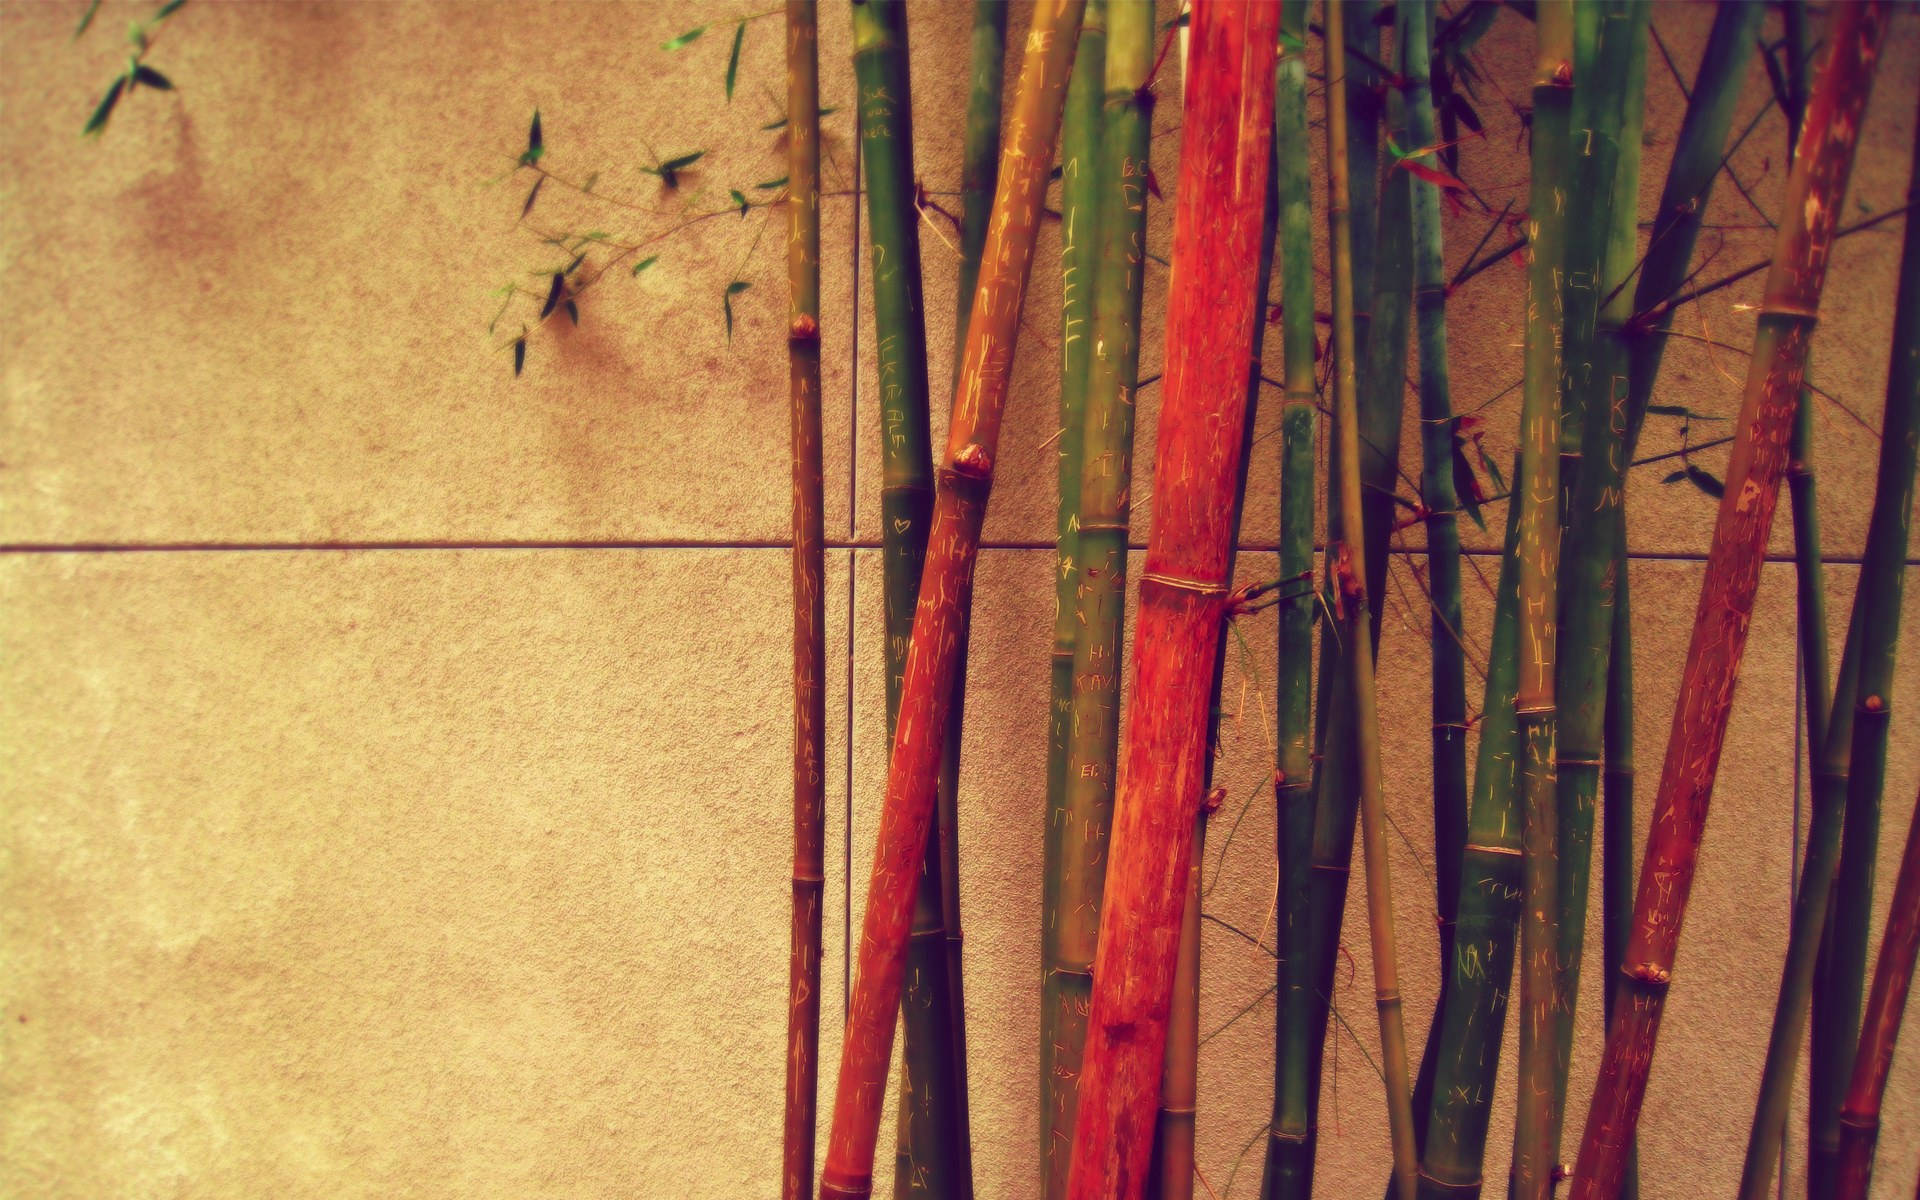 Vintage Retro Bamboo 4k